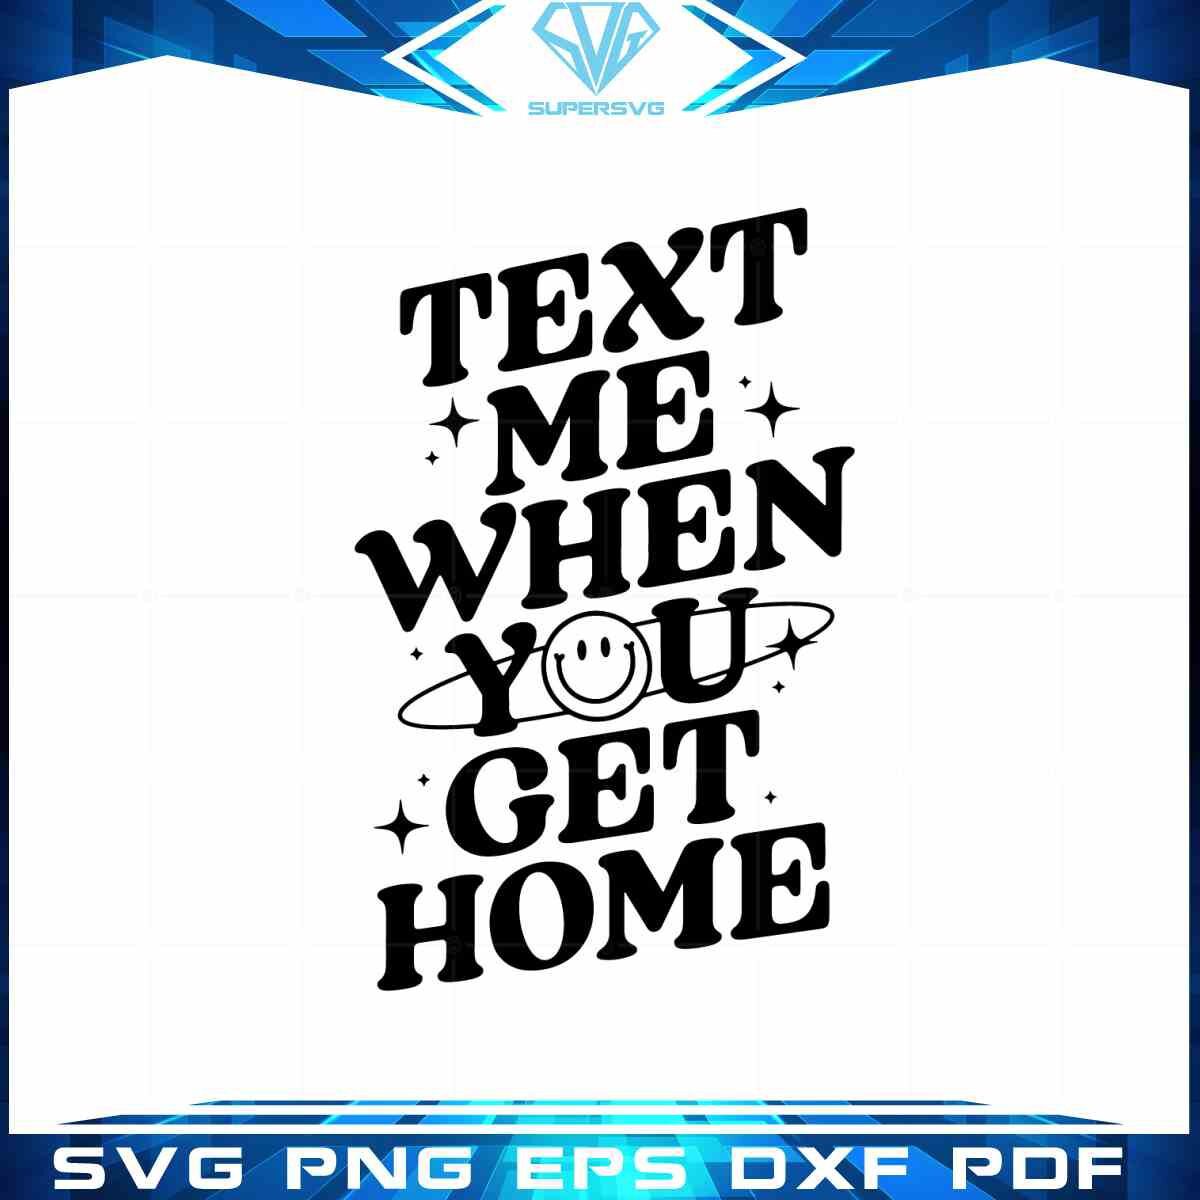 text-me-when-you-get-home-best-design-svg-digital-files